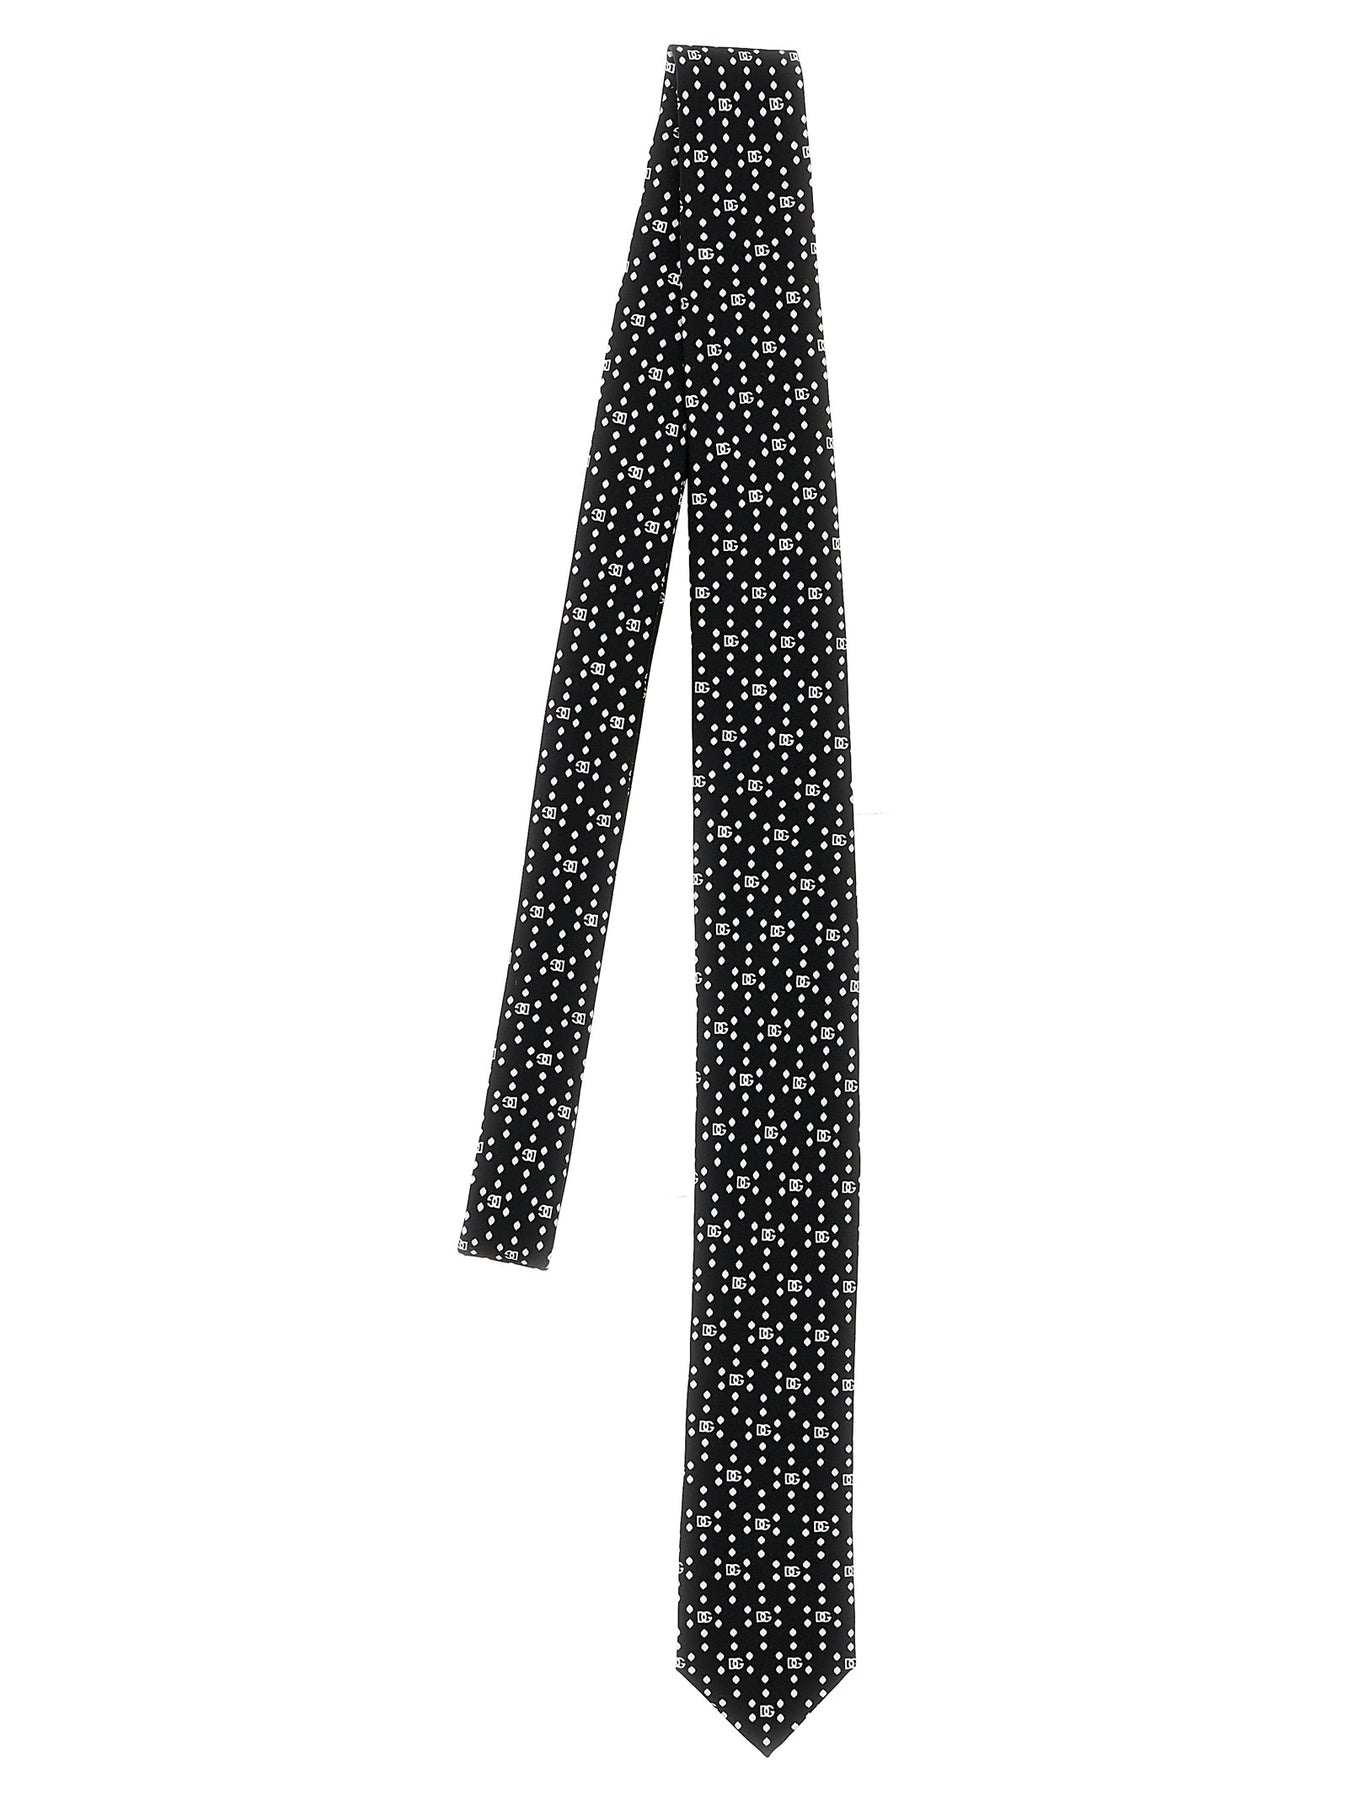 Logo Print Tie Ties, Papillon White/Black - 1